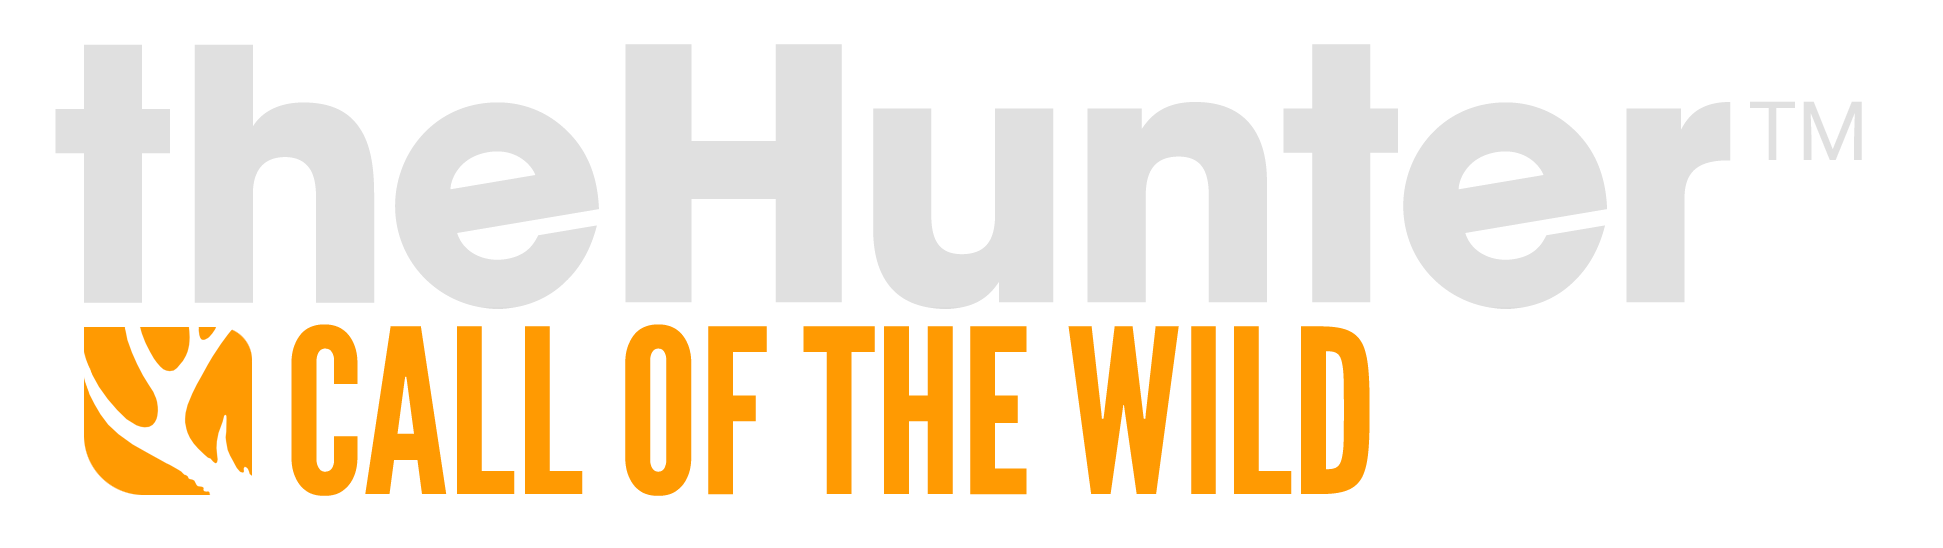 TheHunter: Call of the Wild [v 1.9.1] (2017) PC | RePack от xatab